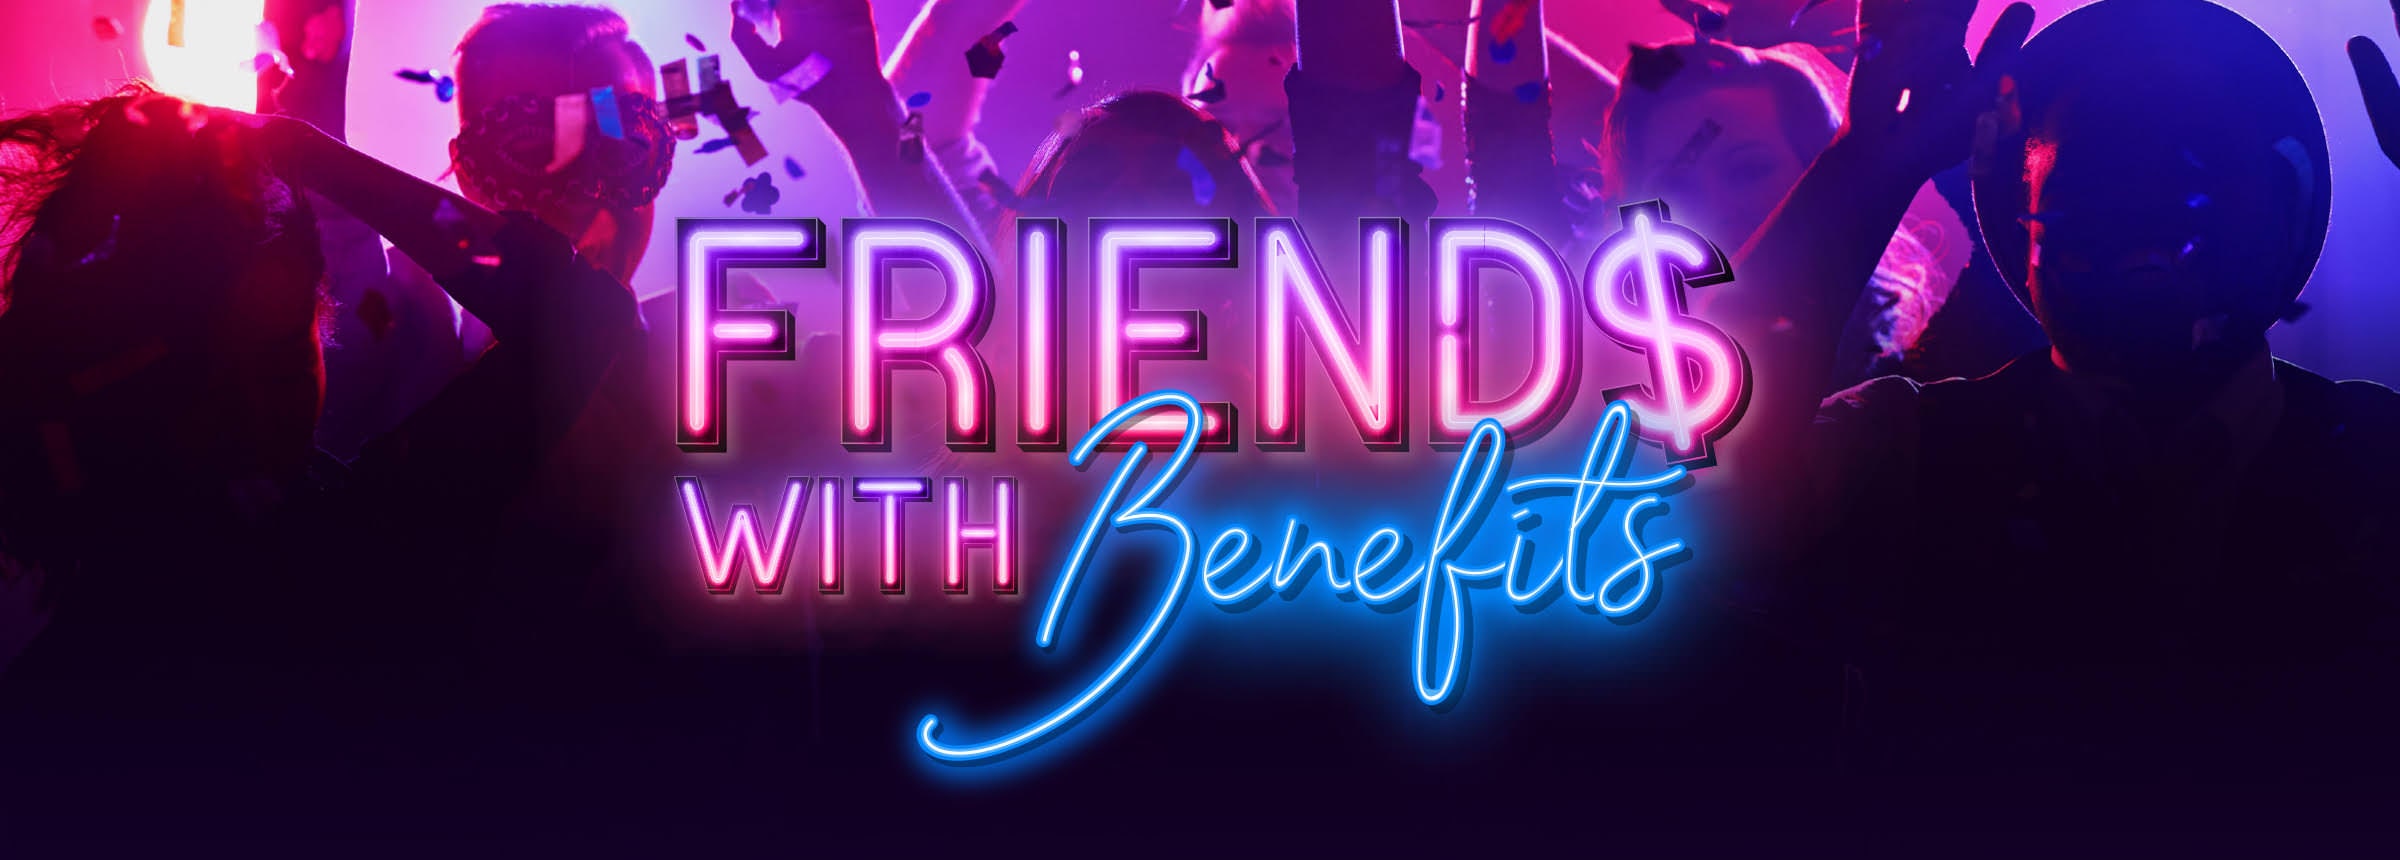 Friends with benefits - Referral Program | MyRepublic